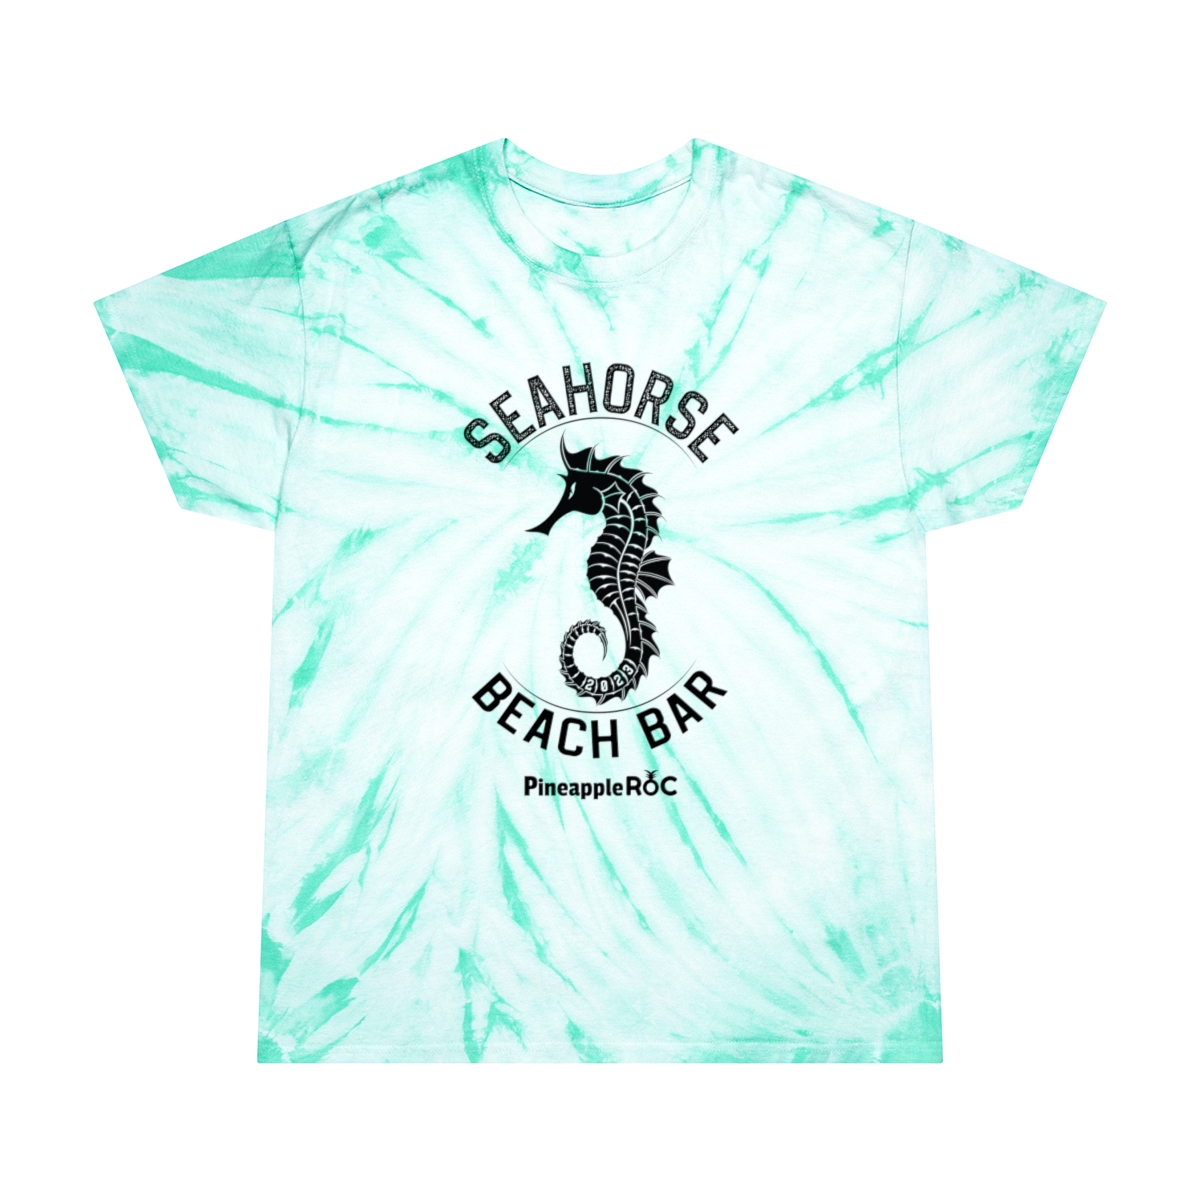 Seahorse Beach Bar product main image